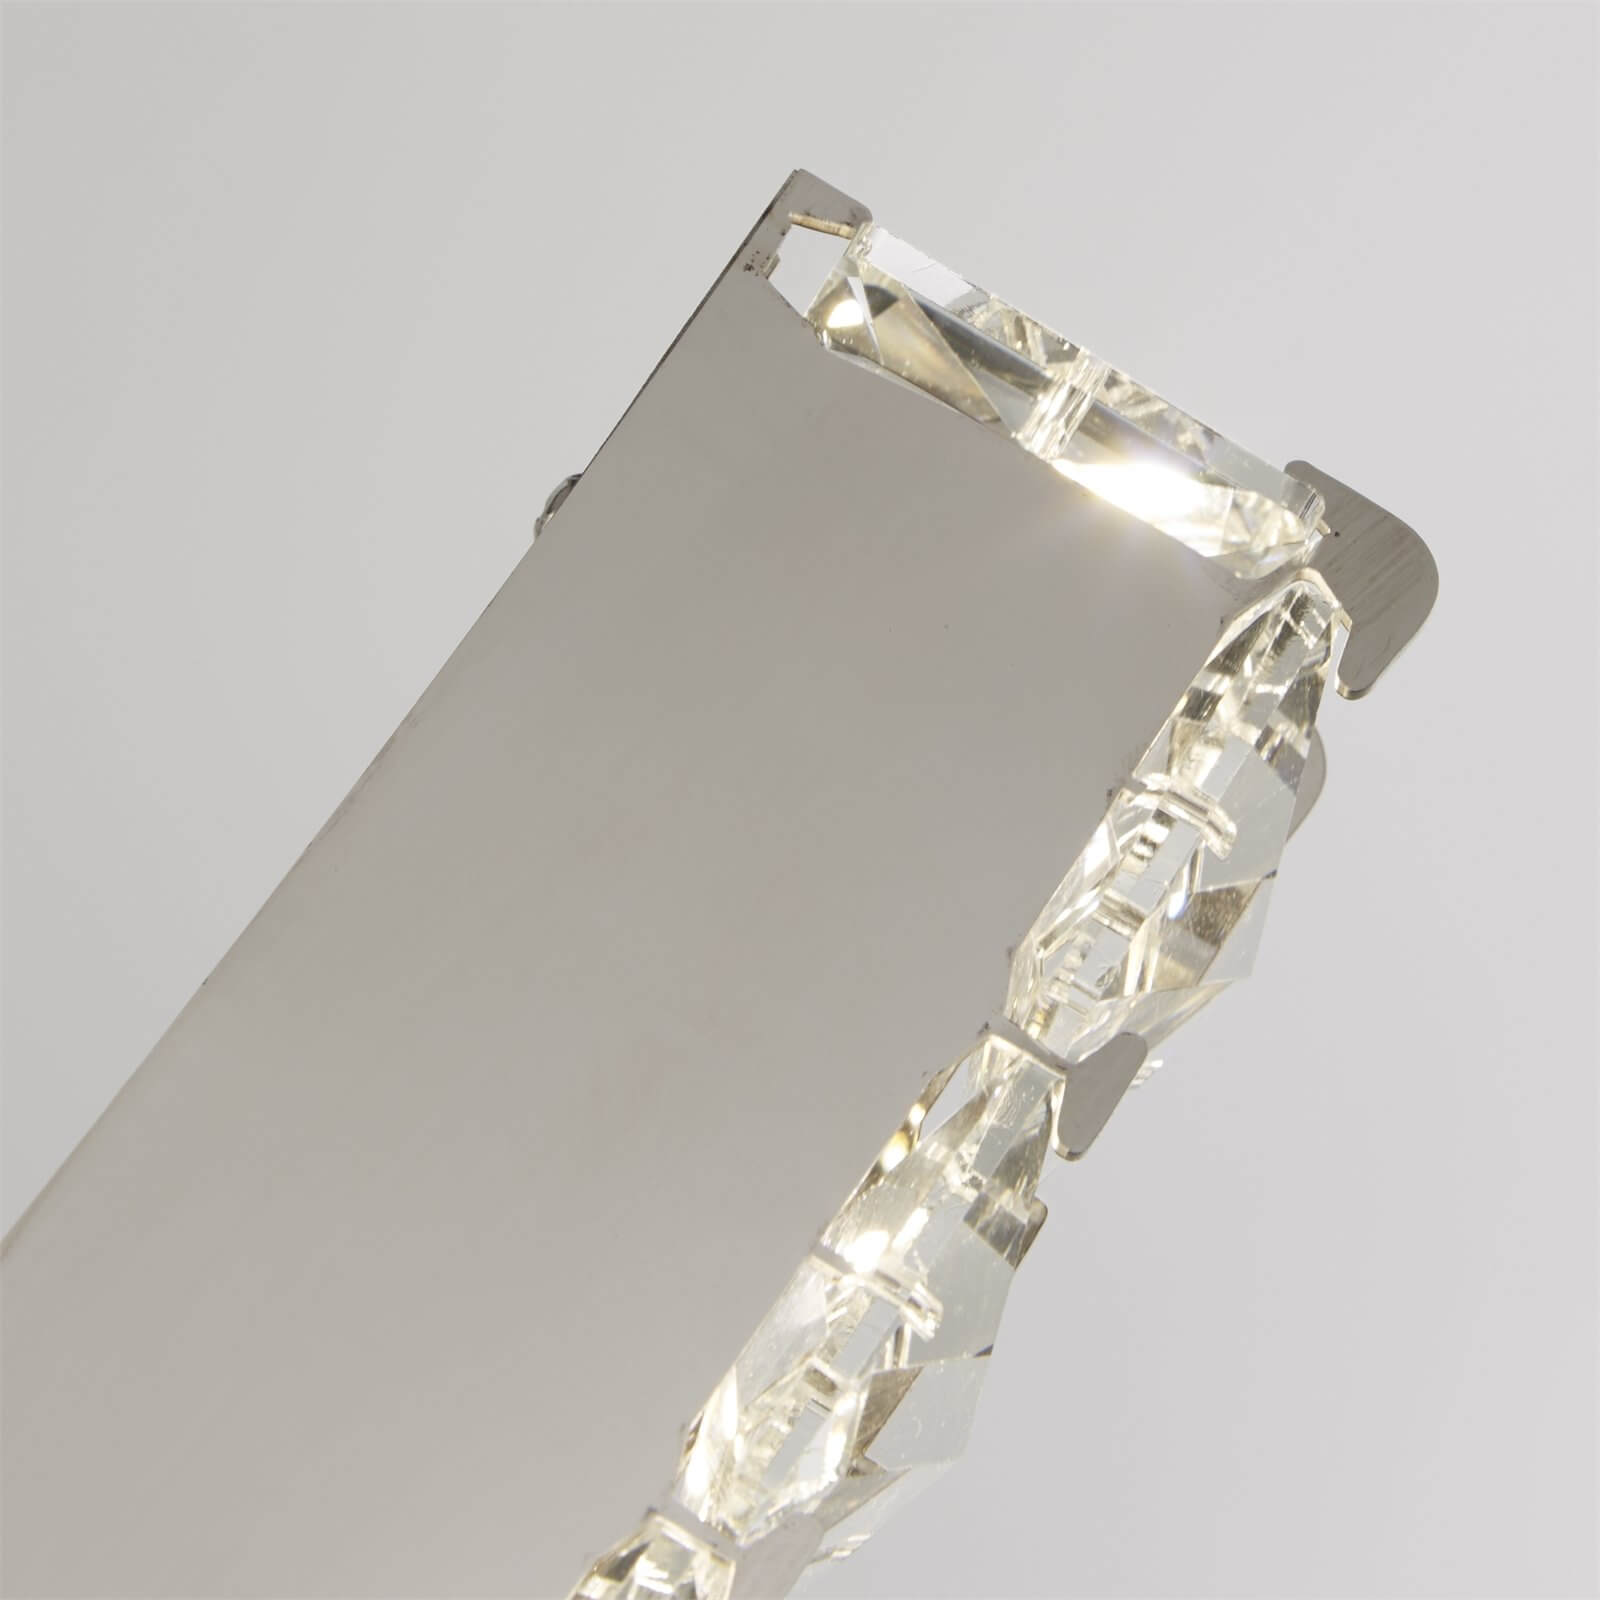 Emerald Crystal LED Bar Pendant Light - Chrome and Clear